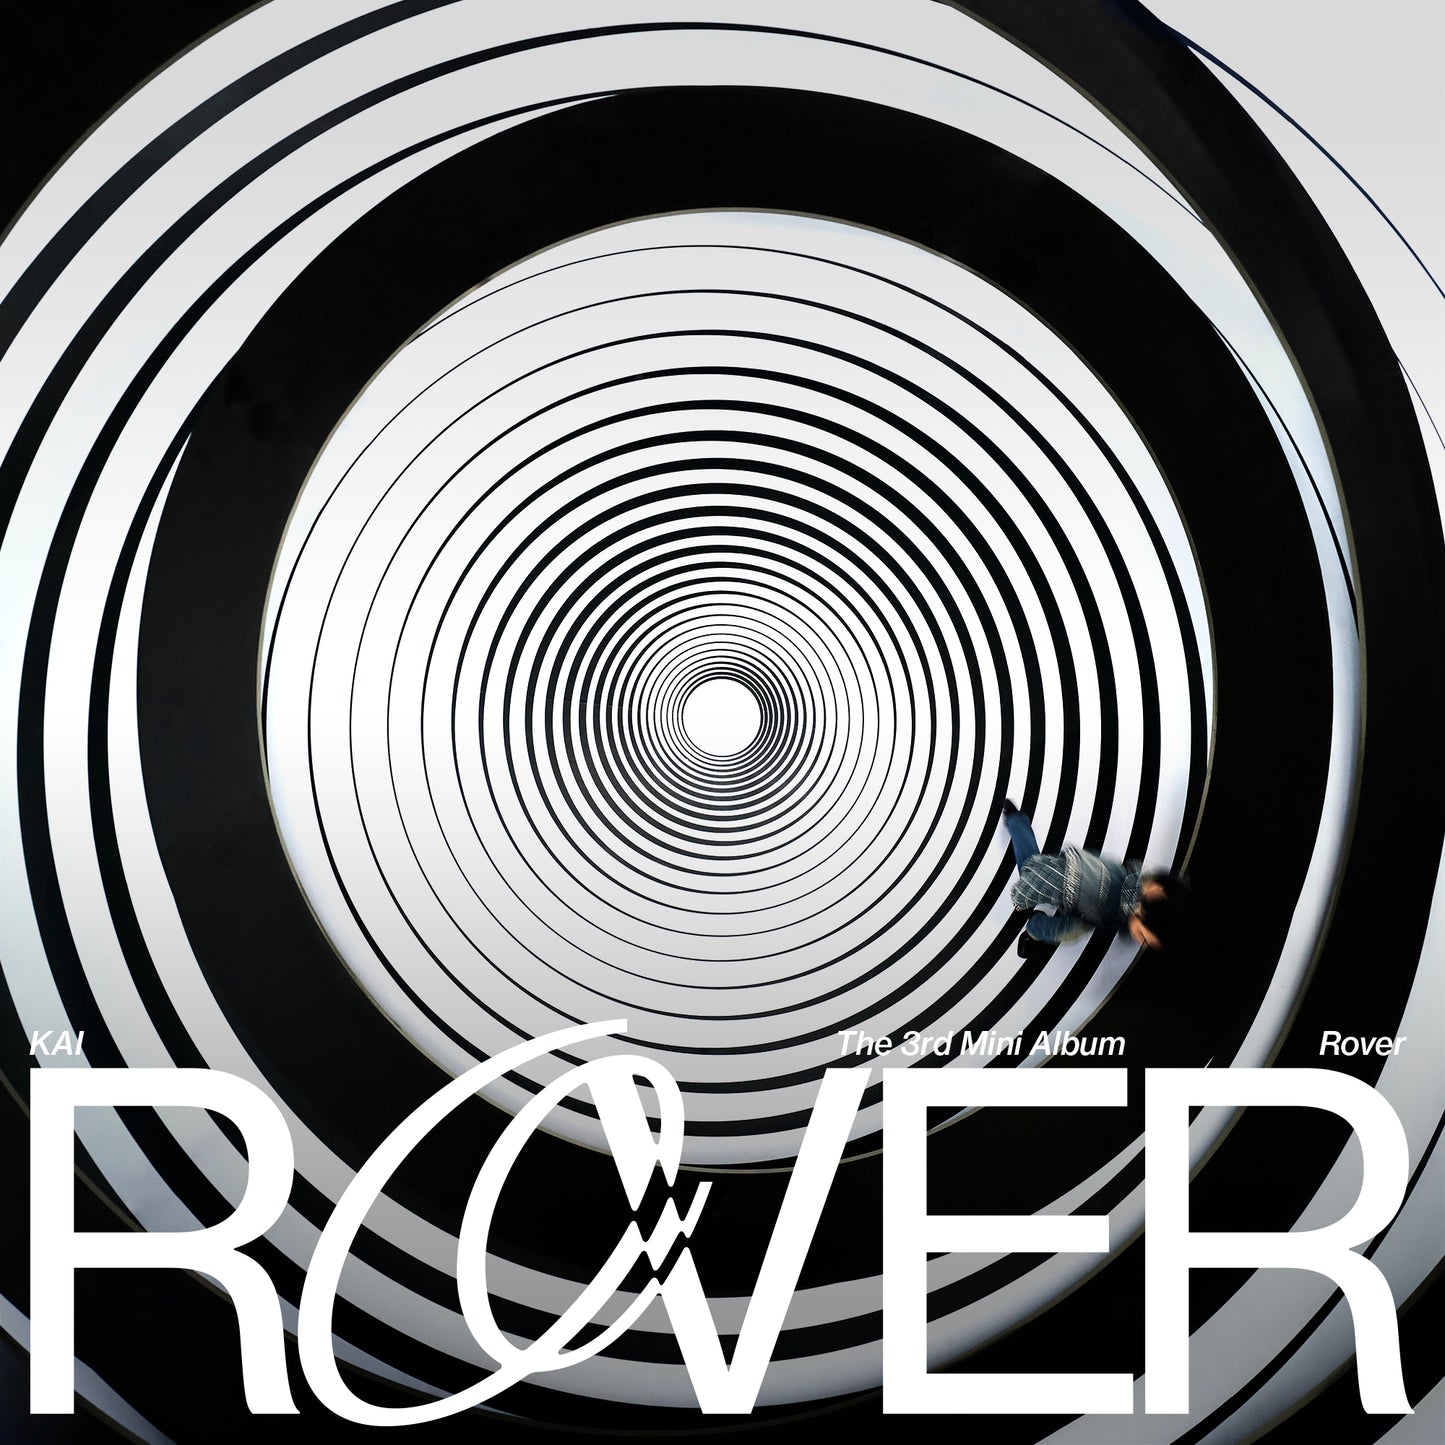 KAI - The 3rd Mini Album [Rover] HOTOBOOK VER